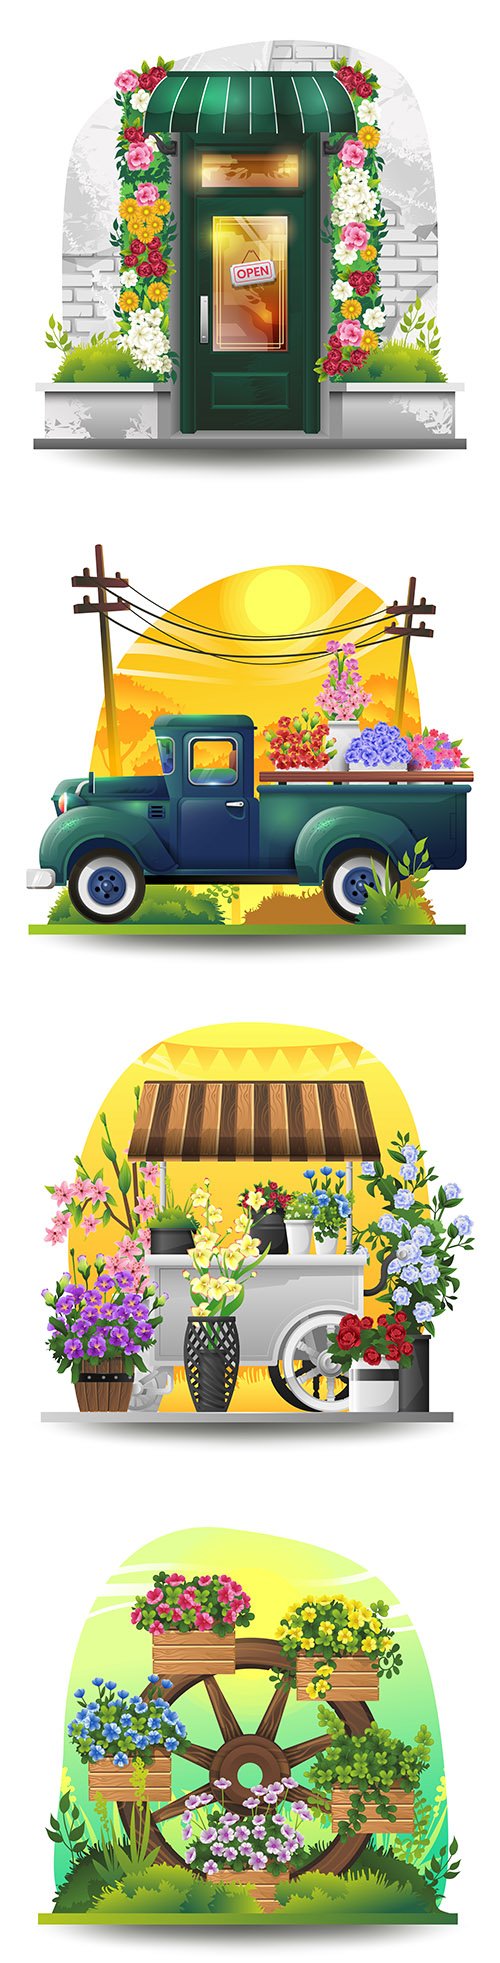 Flower cart with flowers in spring garden illustration